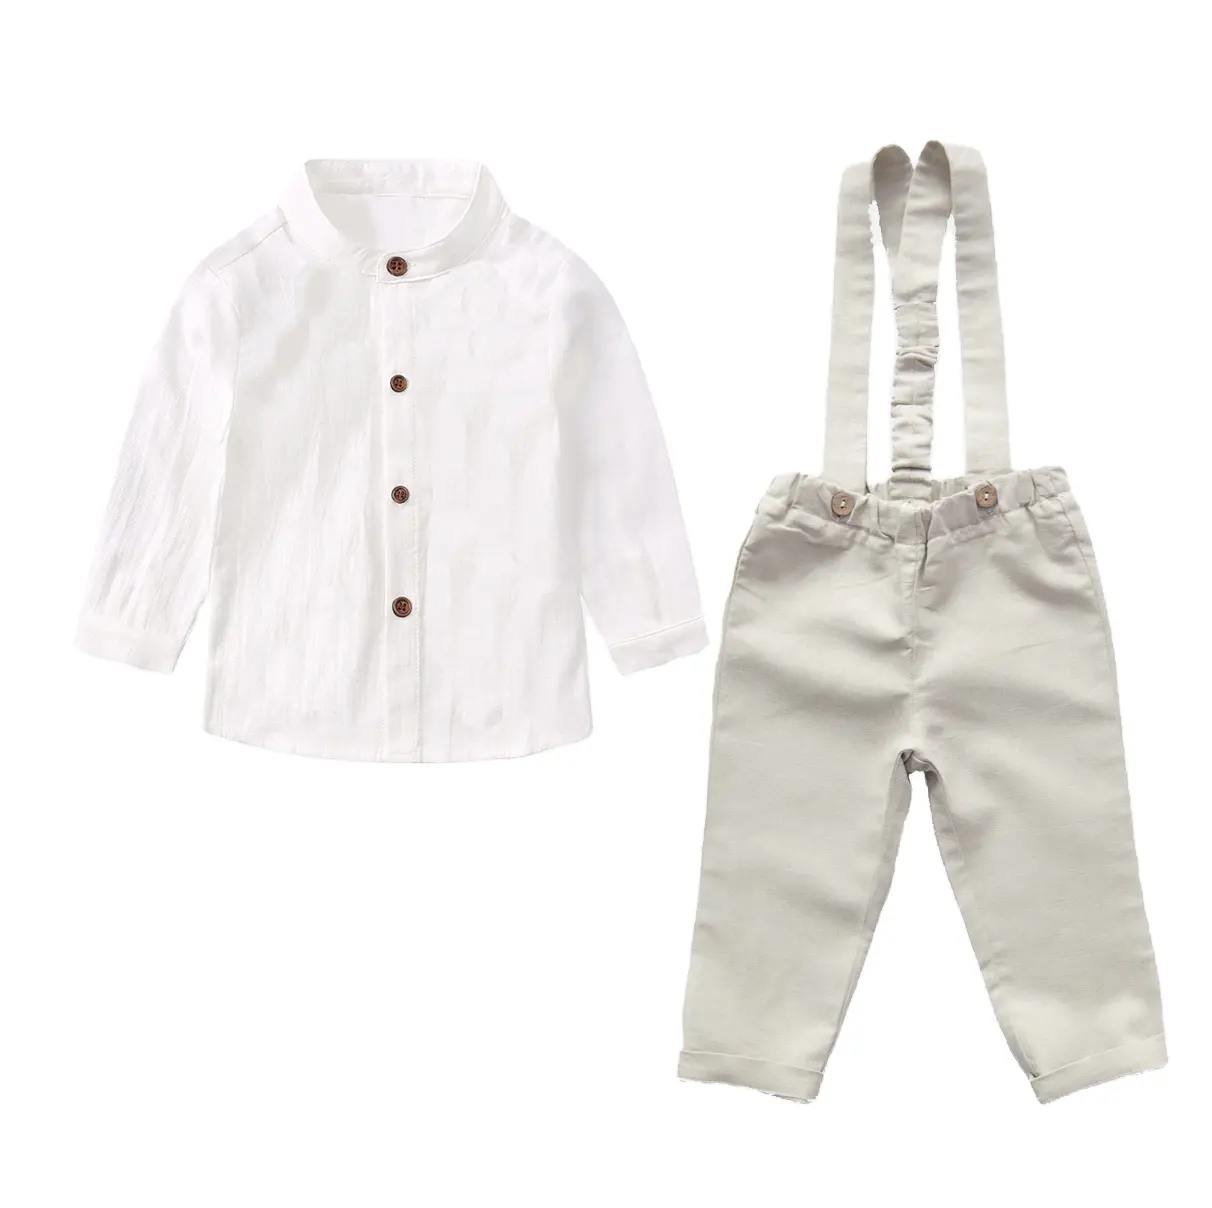 Personalizado Children's Birthday Gentleman's Dress Toddler Baby Boy Linen Carrier Pants Meninos Wedding Suspender Outfit 1-3 Anos